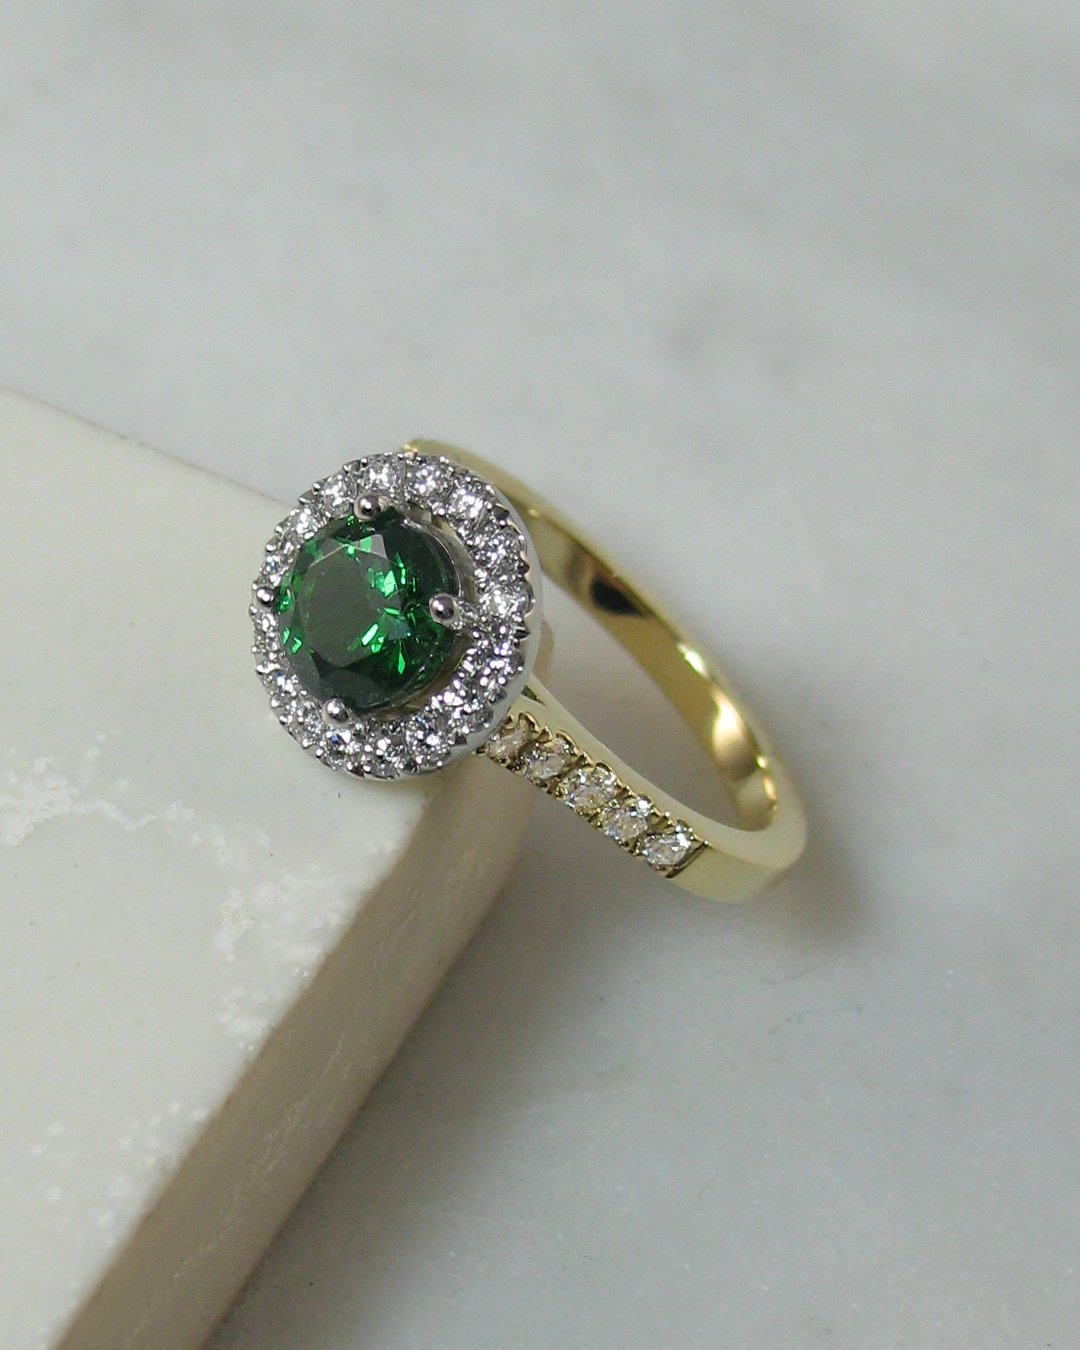 An eye catching diamond and tsavorite garnet engagement ring